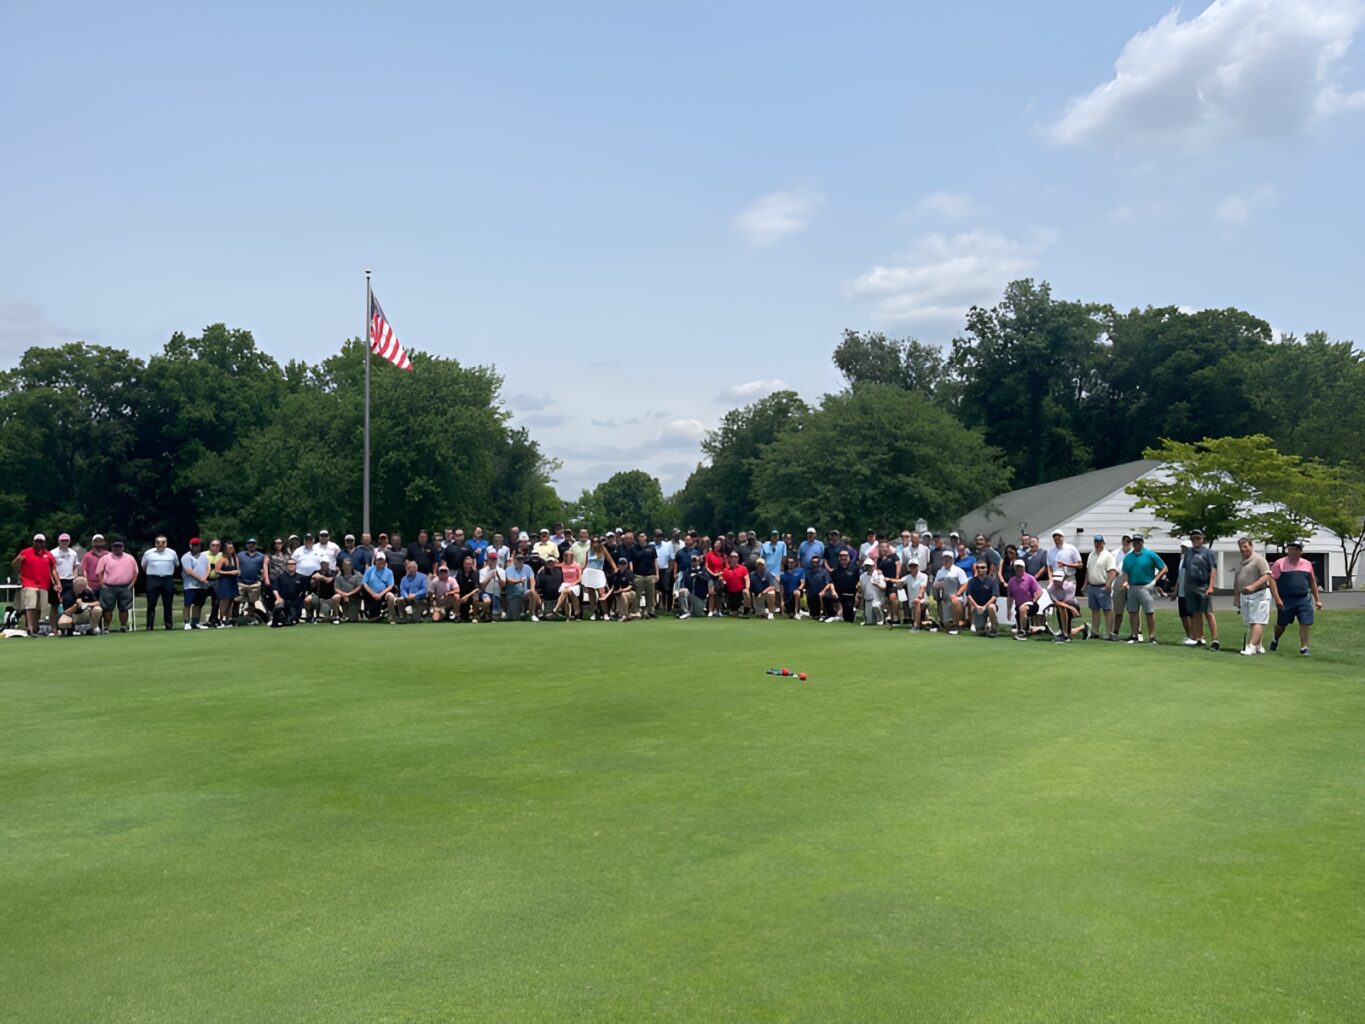 6th Annual WCRE Charity Golf Tournament Raises $86,000